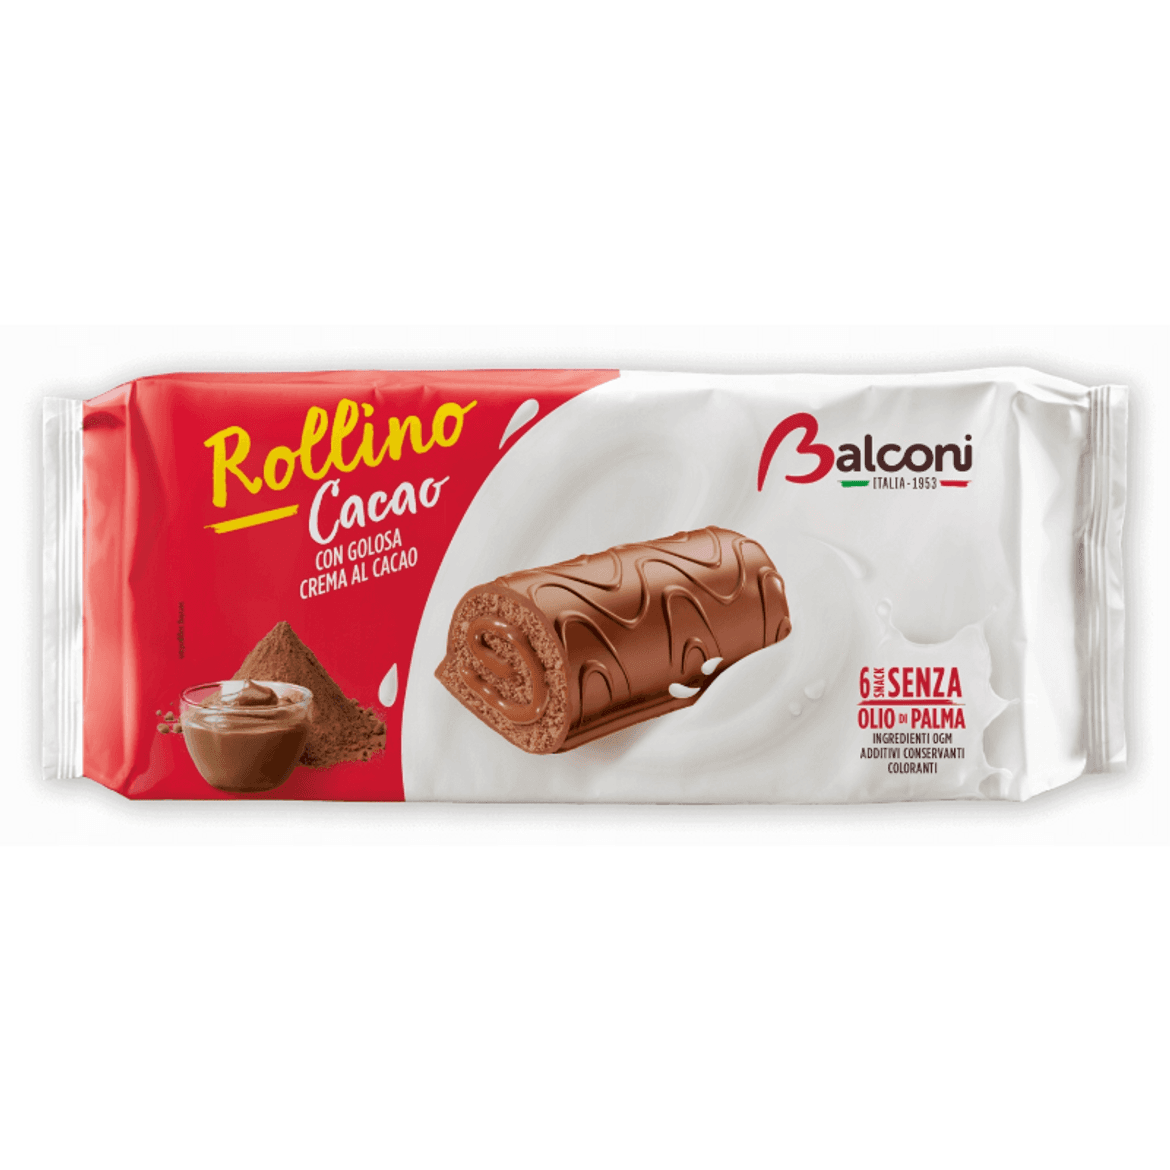 Balconi piskótatekercs 222g rollino cacao - csokimártott kakaós kr.37g